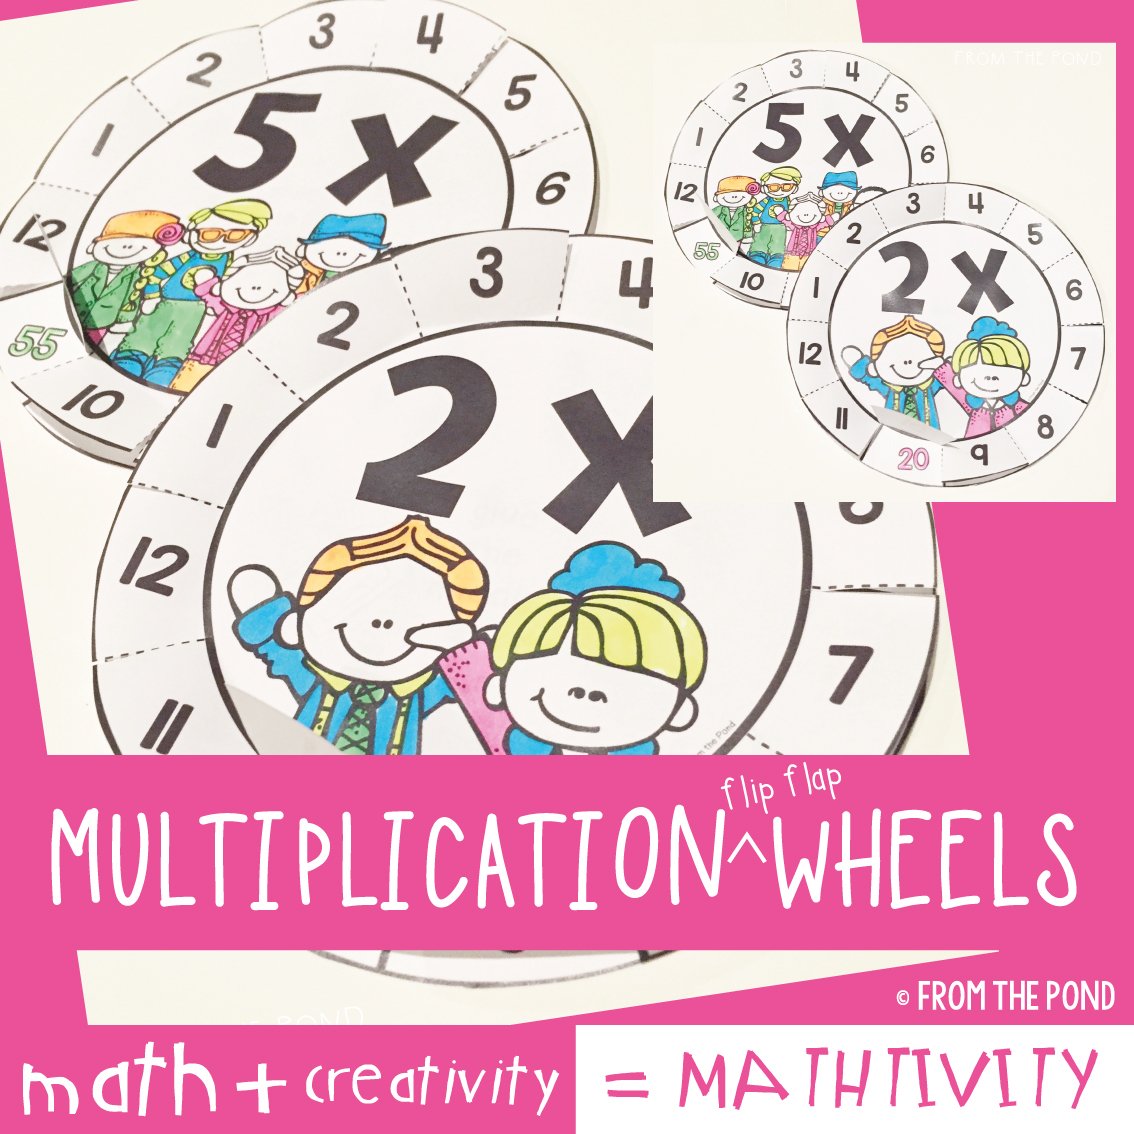 Multiplication Wheels